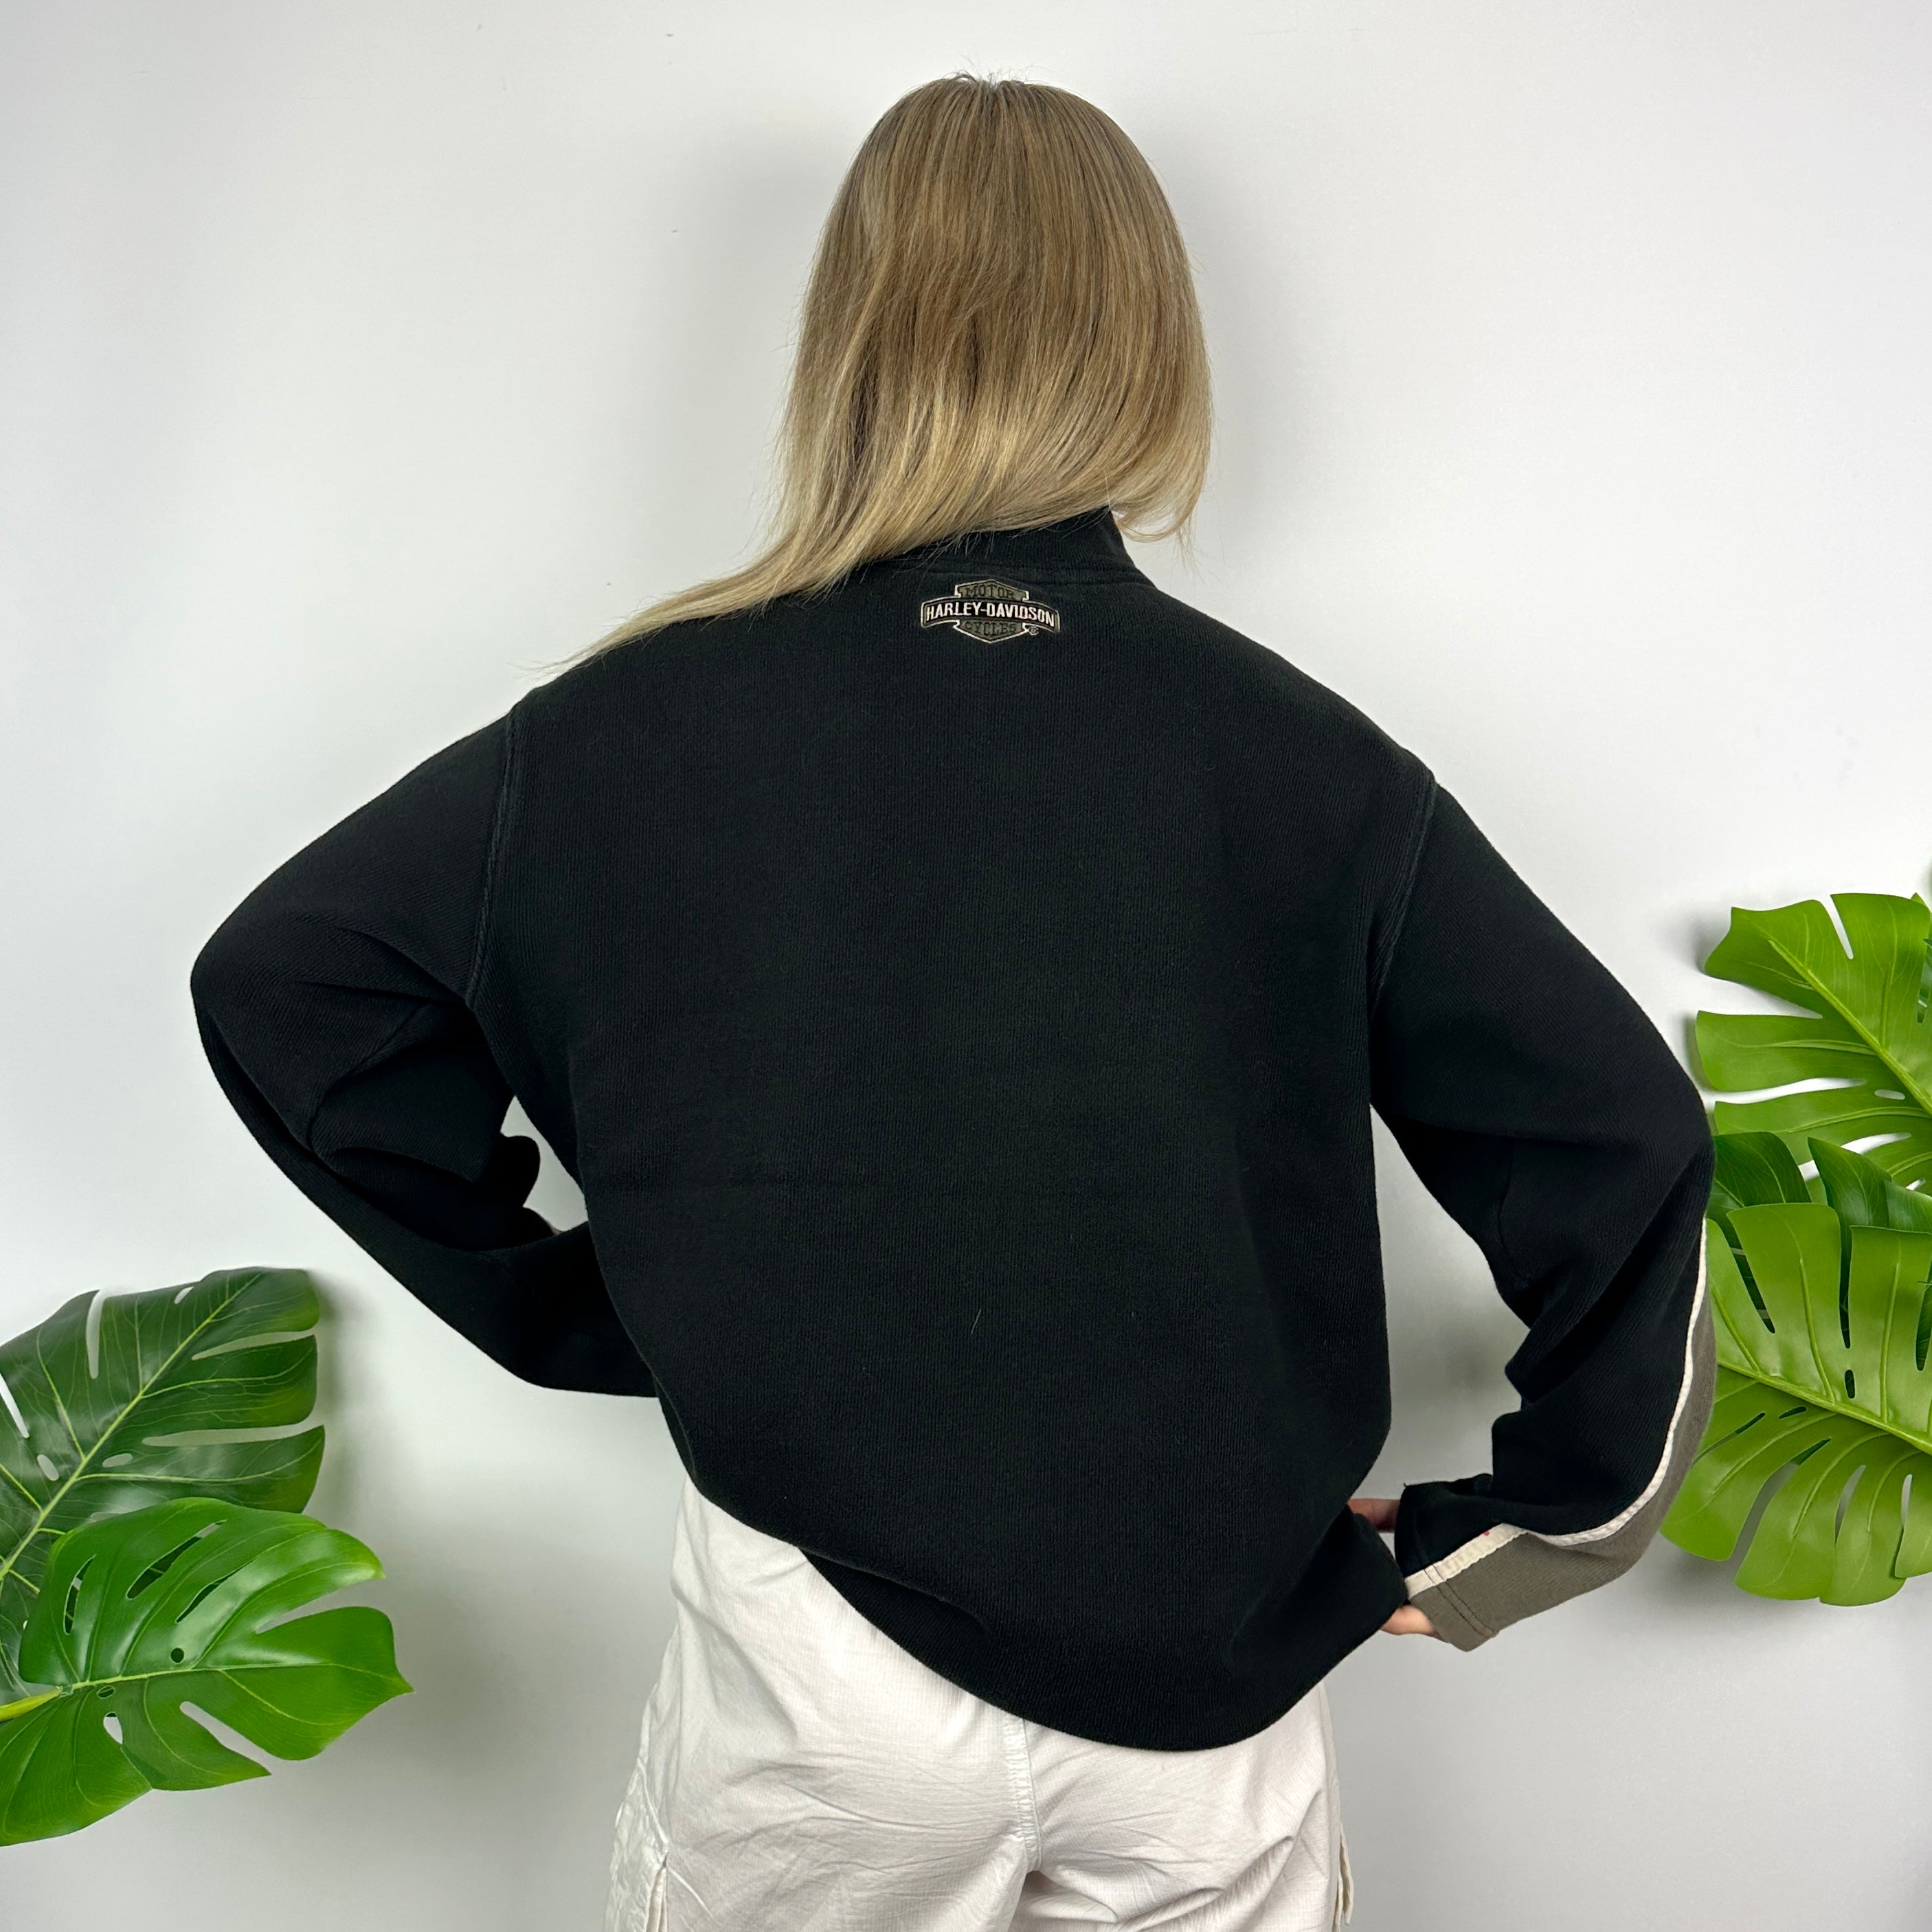 Harley Davidson Black Embroidered Spell Out Quarter Zip Sweatshirt (L)